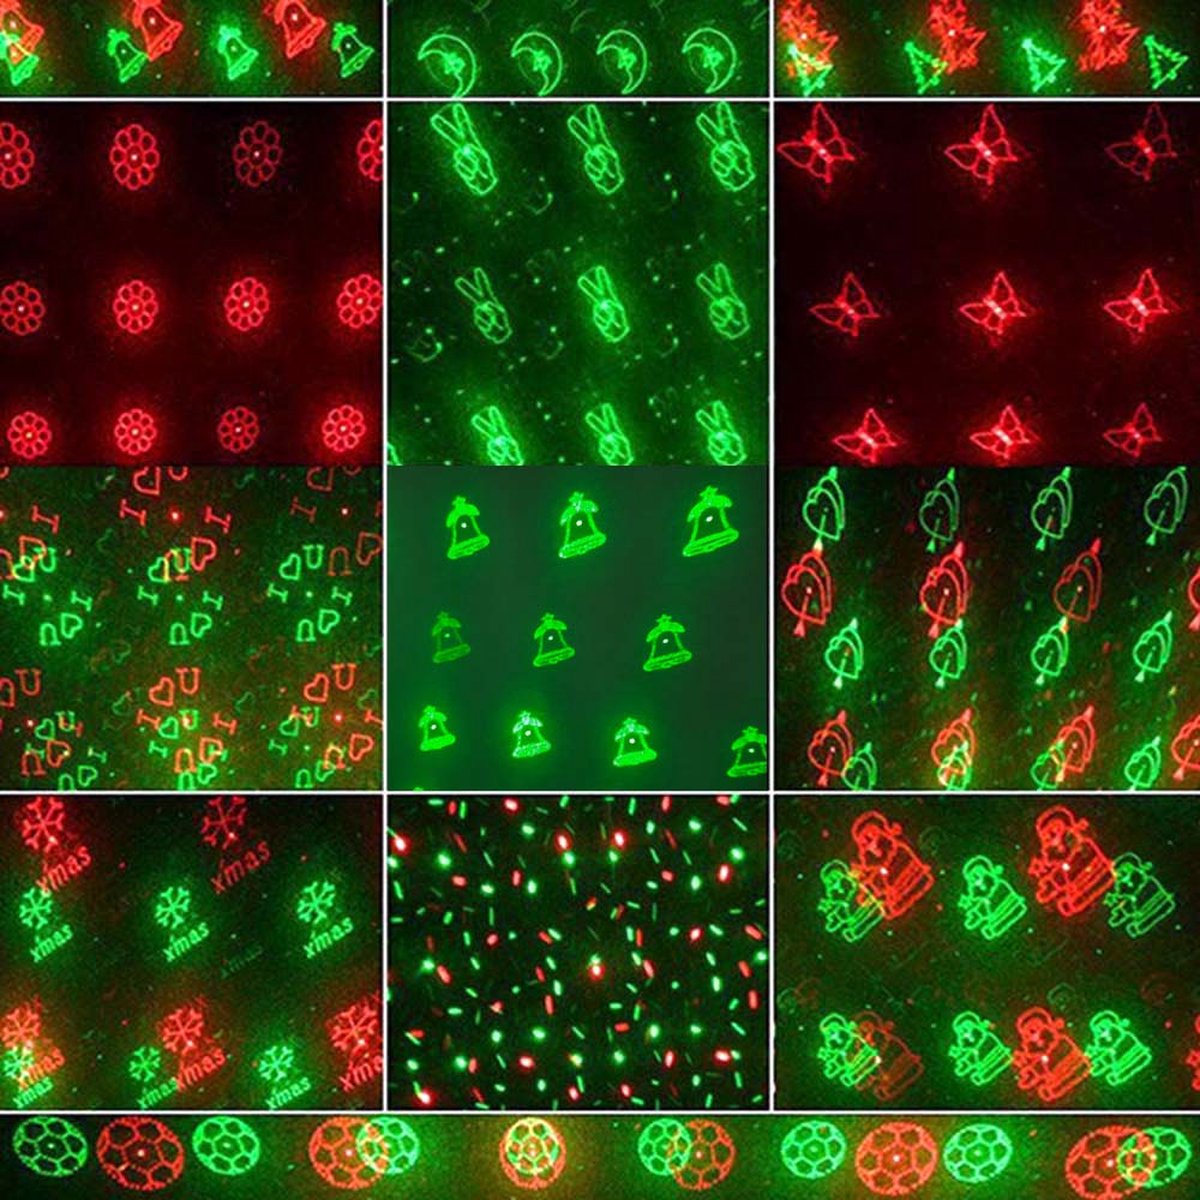 <tc>Ariko</tc> Laser garden lighting - Moving lighting - Laser show - Atmosphere light - Christmas lighting - Garden lighting - Water resistant -Red and Green